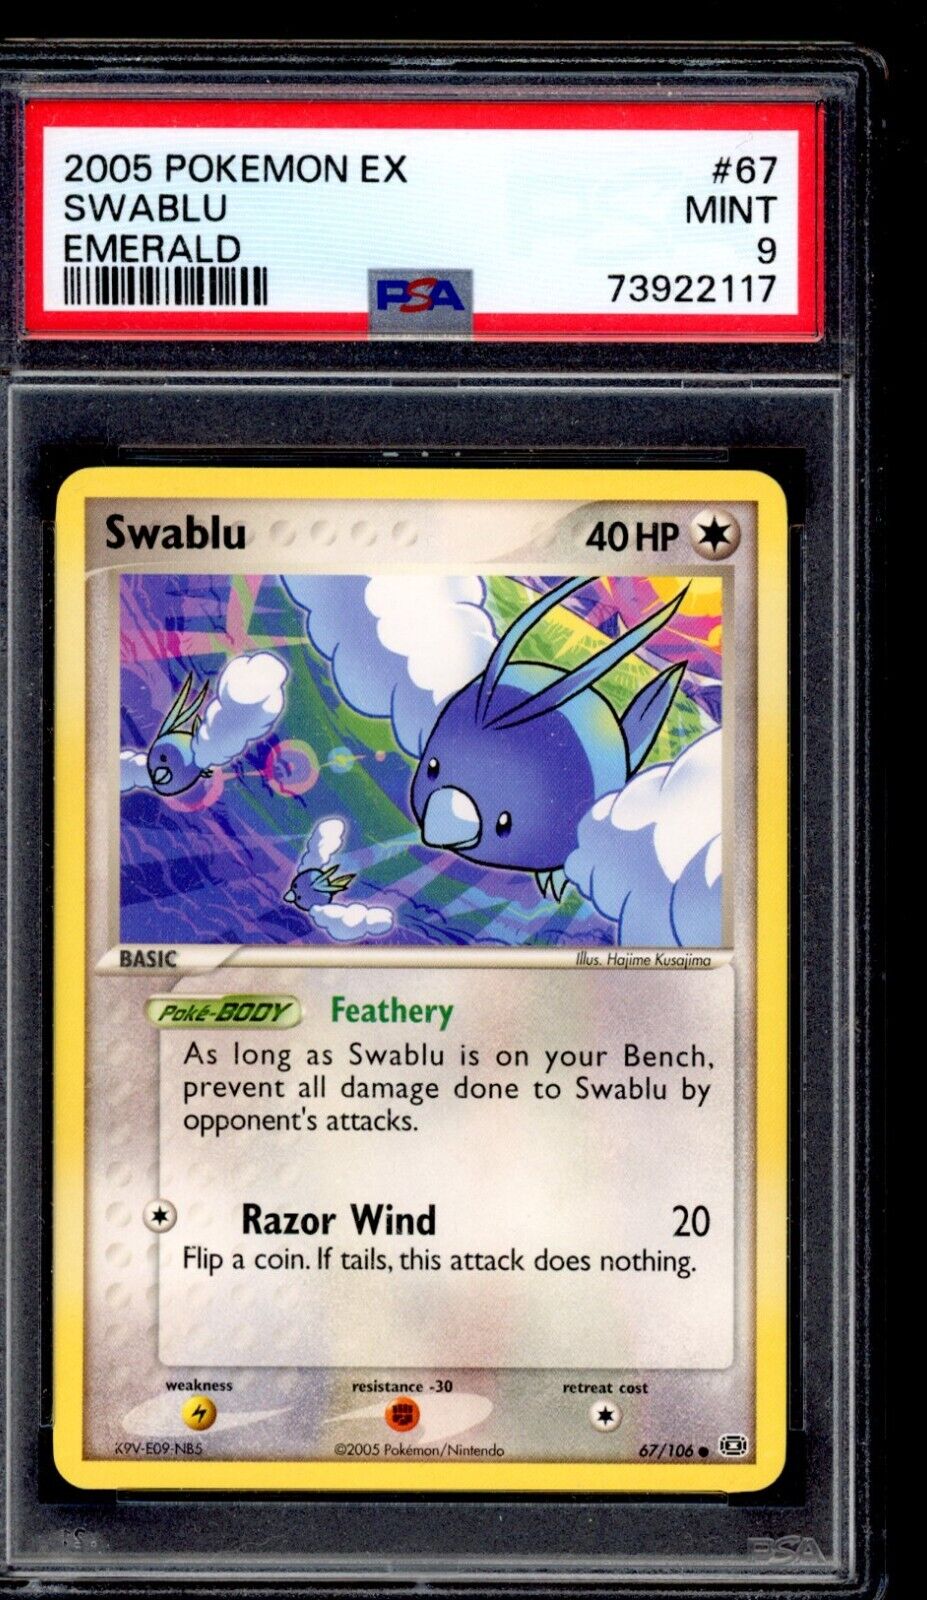 PSA 9 Swablu 2005 Pokemon Card 67/106 Emerald